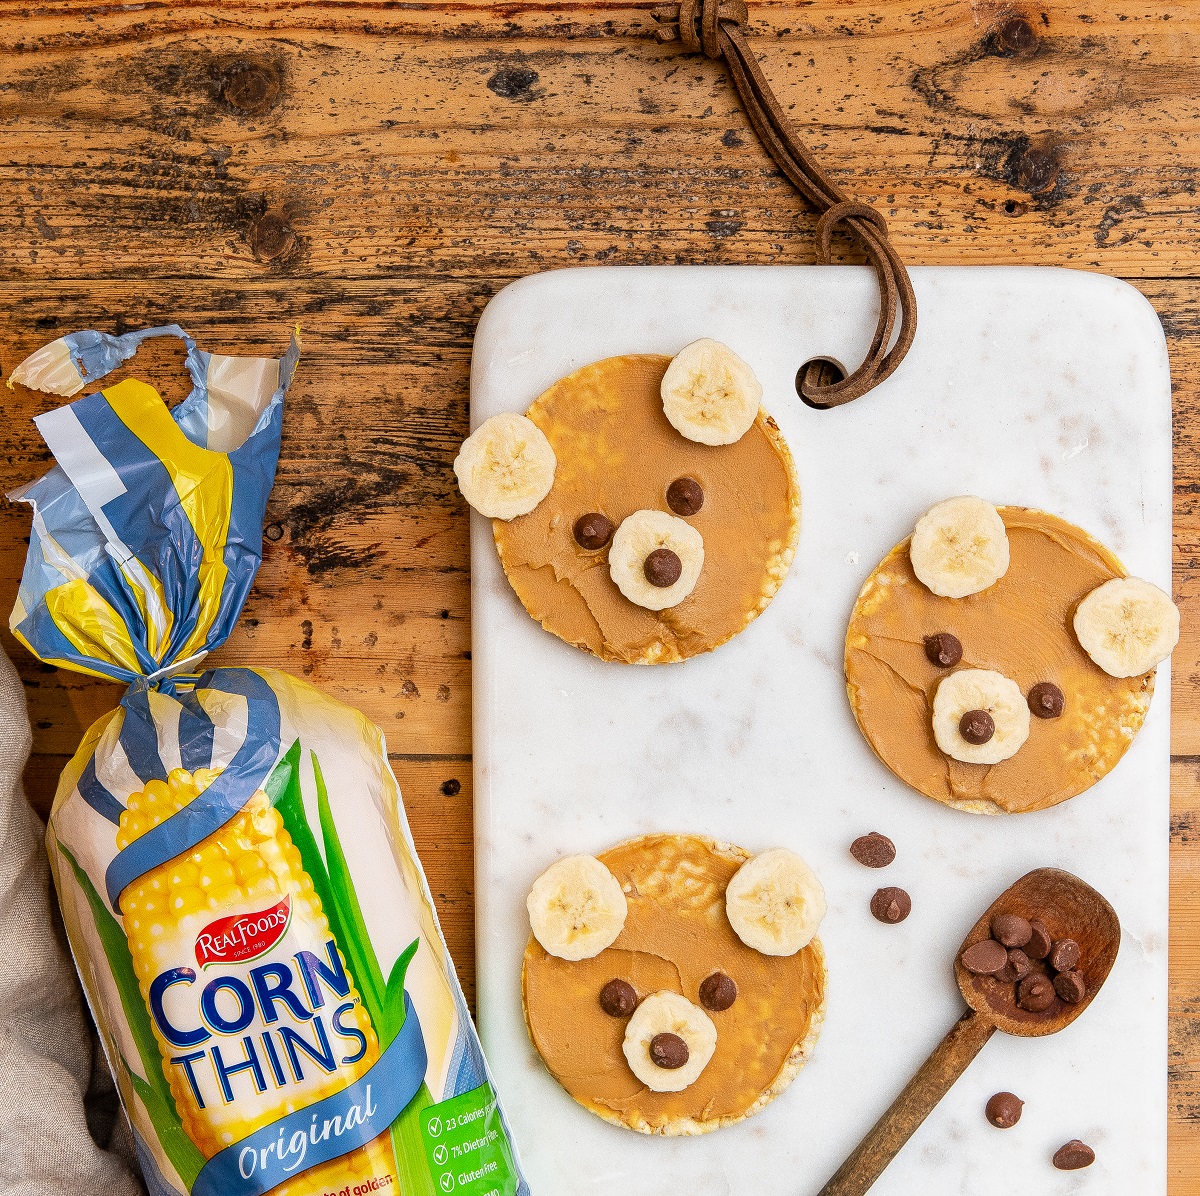 Peanut butter & banana Teddy Bears using CORN THINS slices